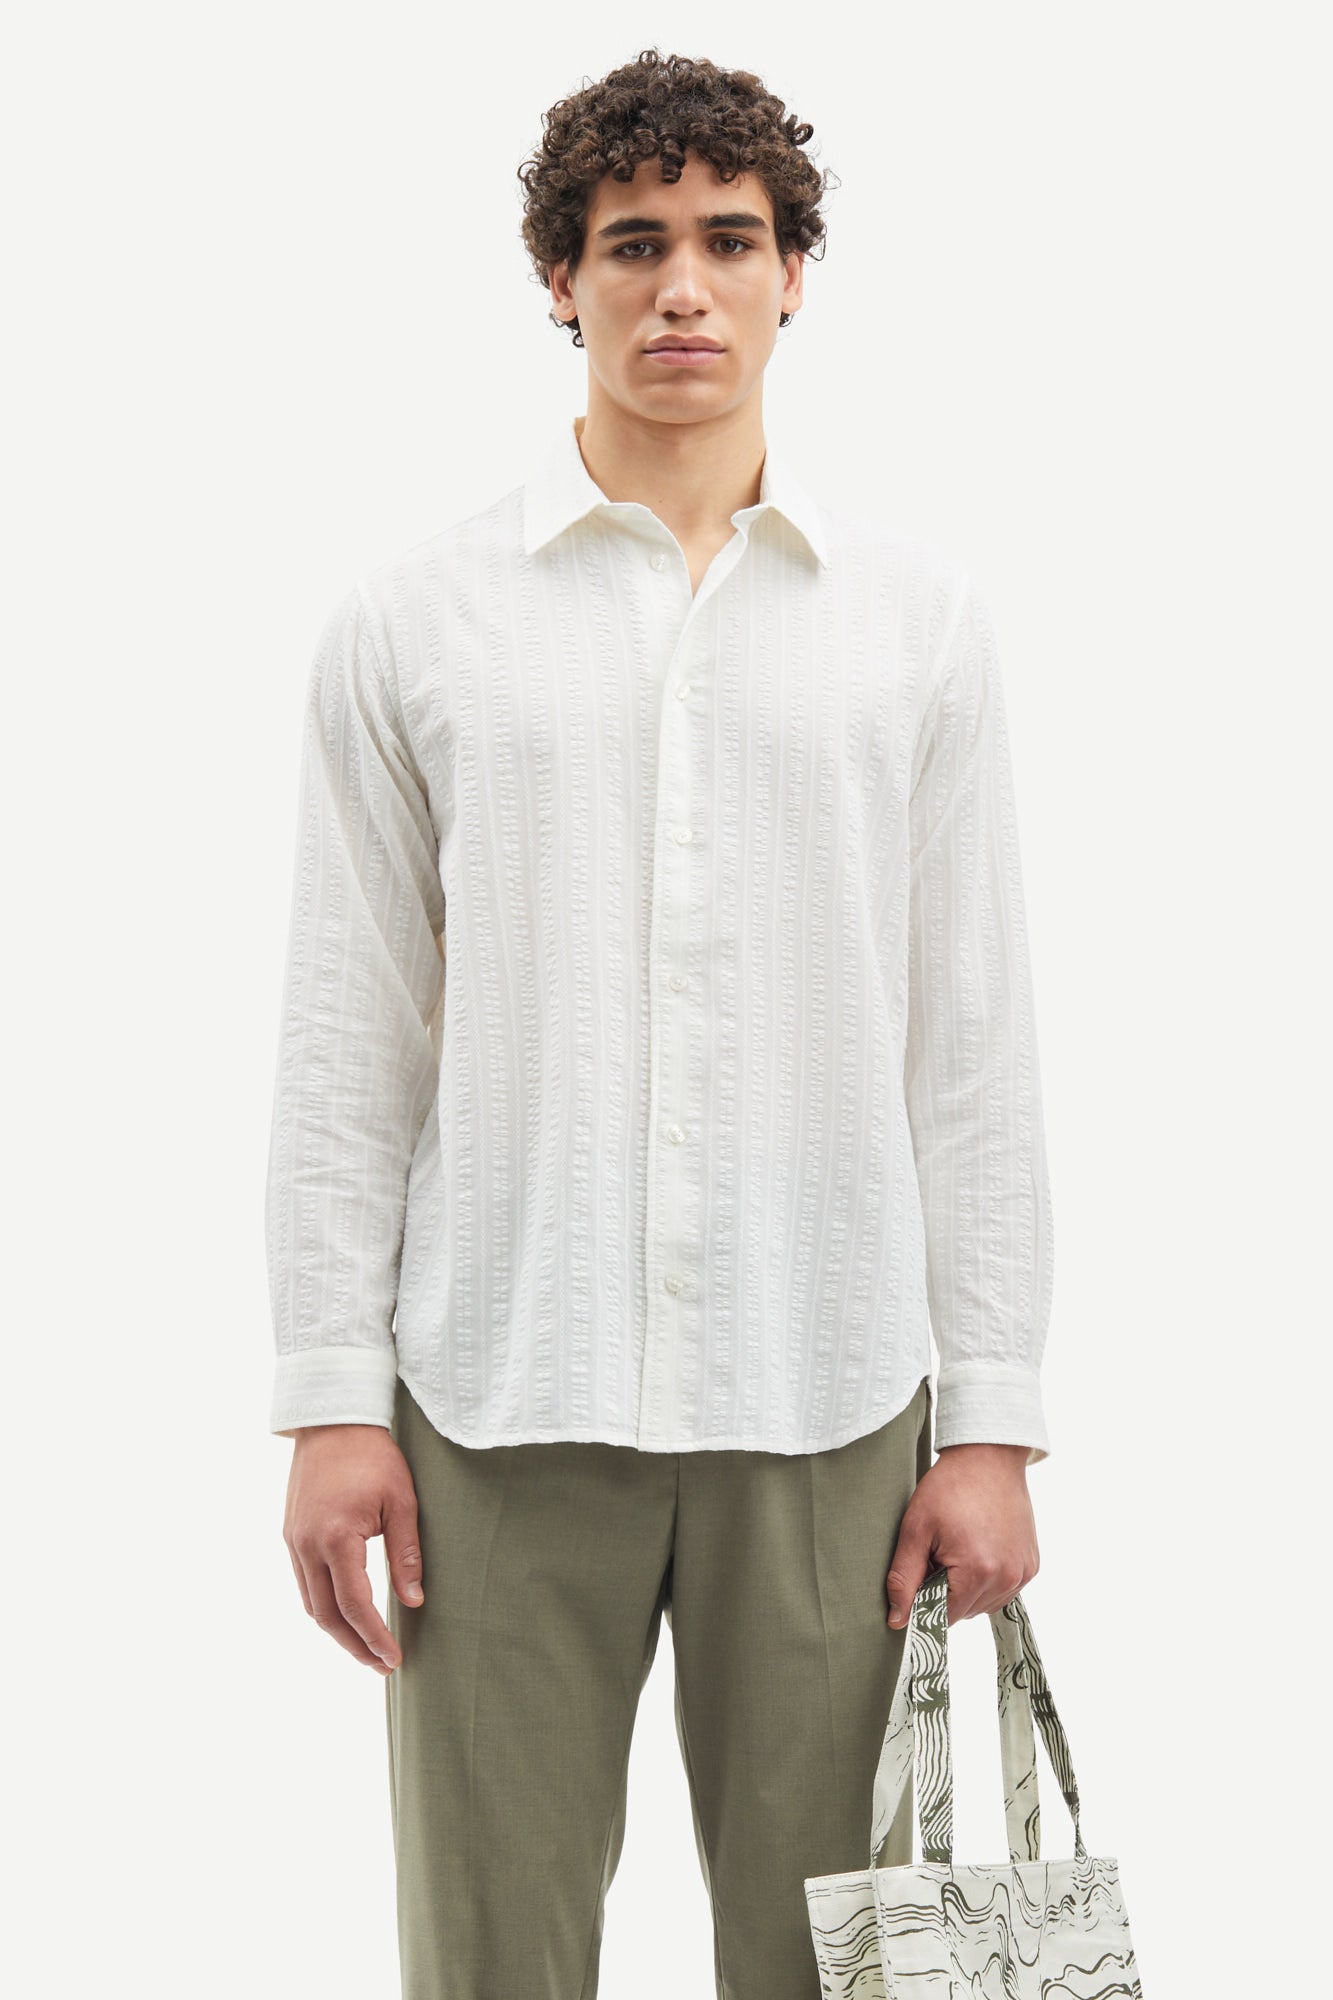 Cotton shirt in clear cream